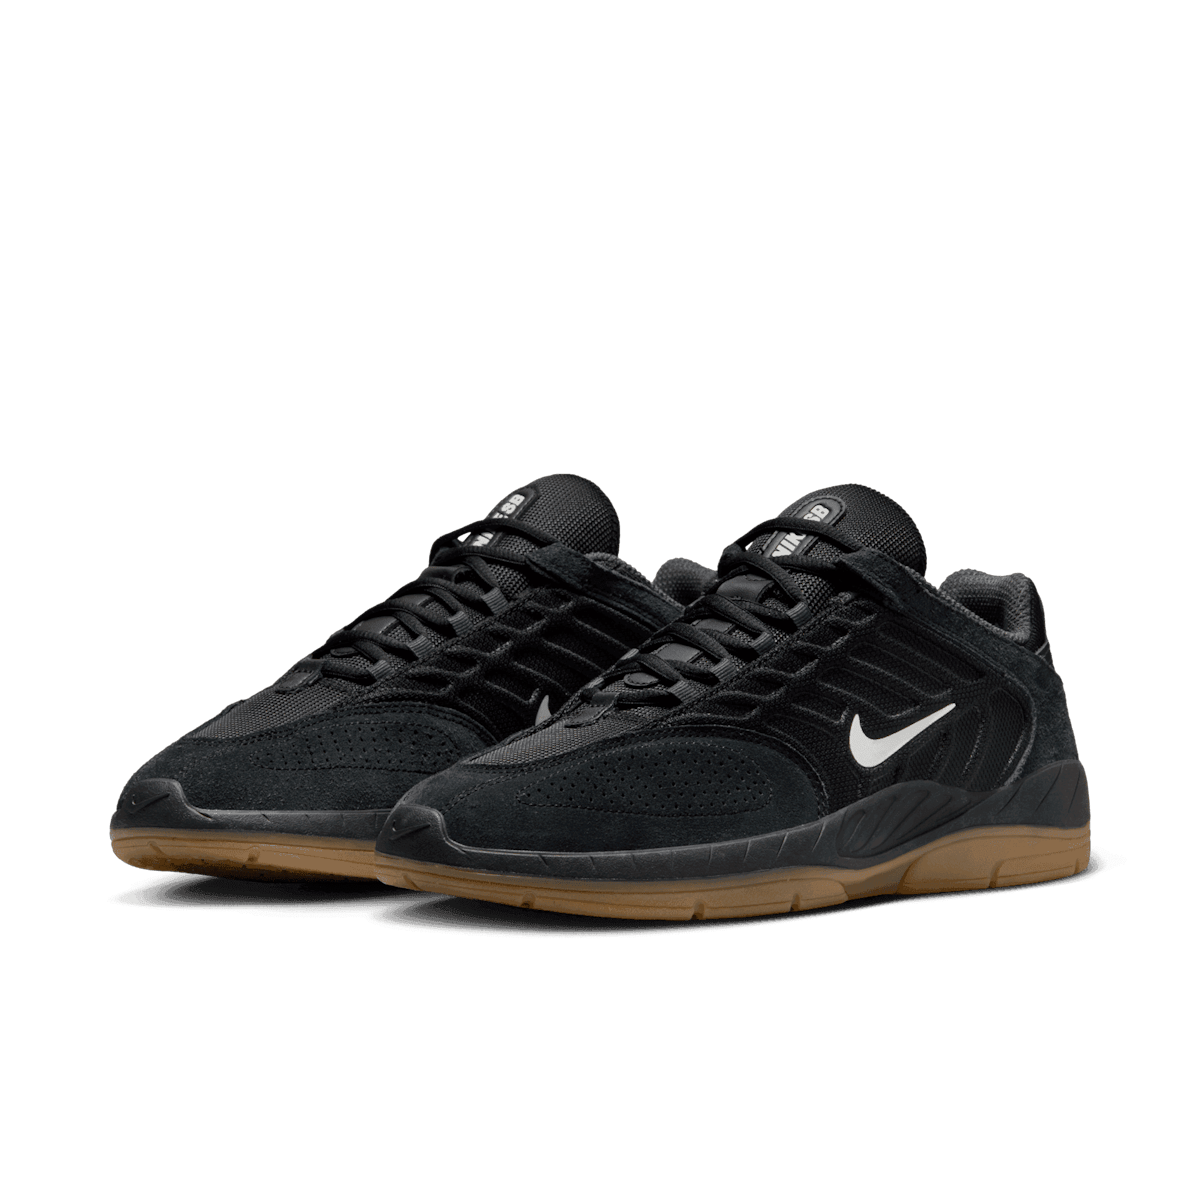 Nike SB Vertebrae Black Gum Angle 2